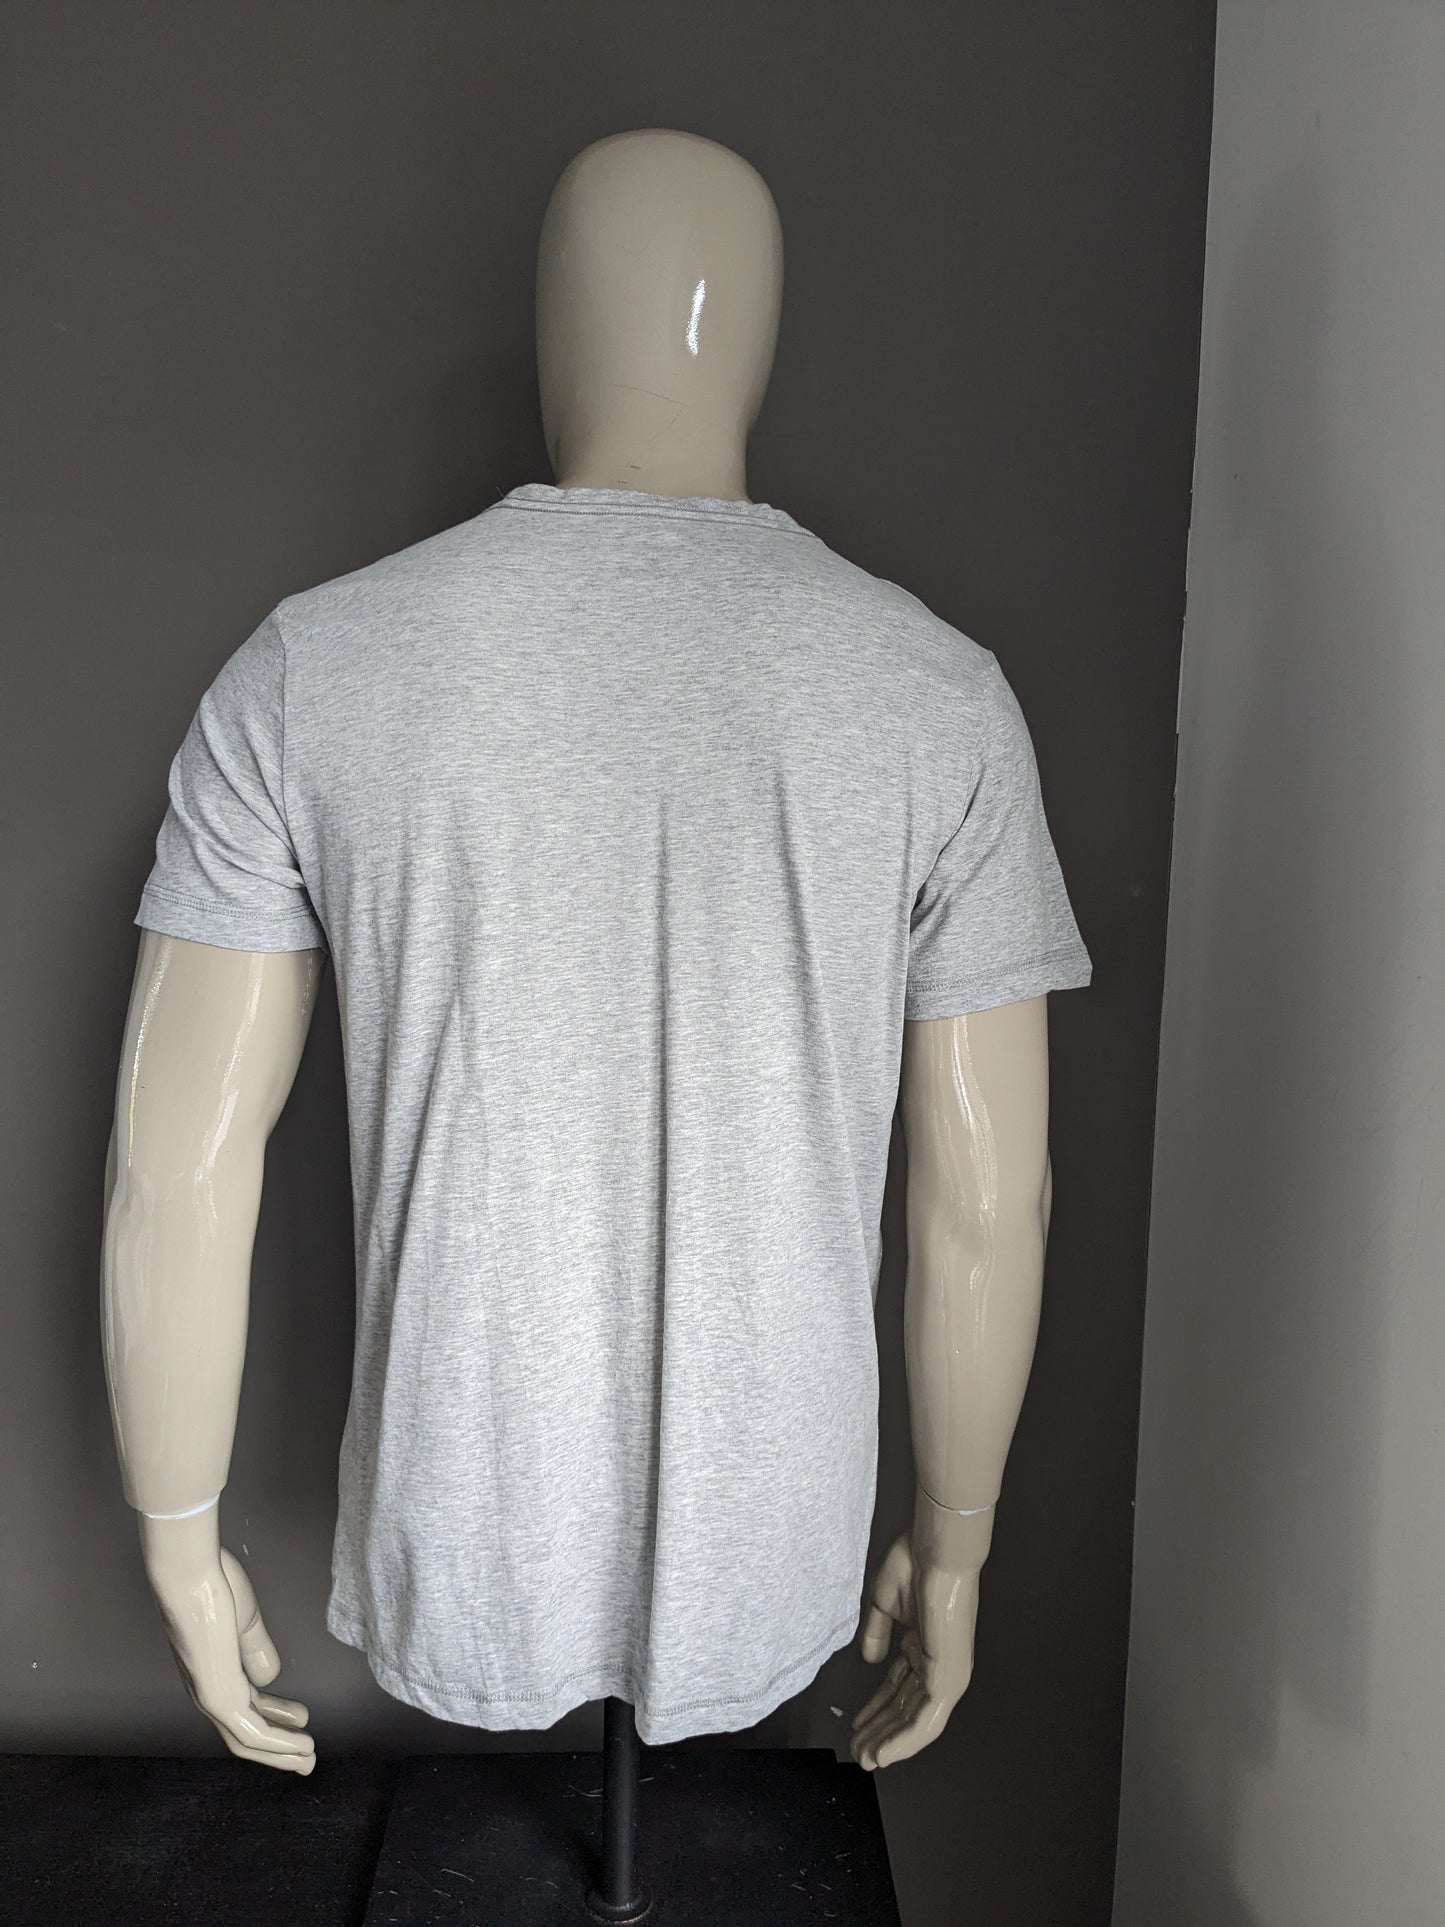 Puma shirt. Gray mixed with print. Size L.